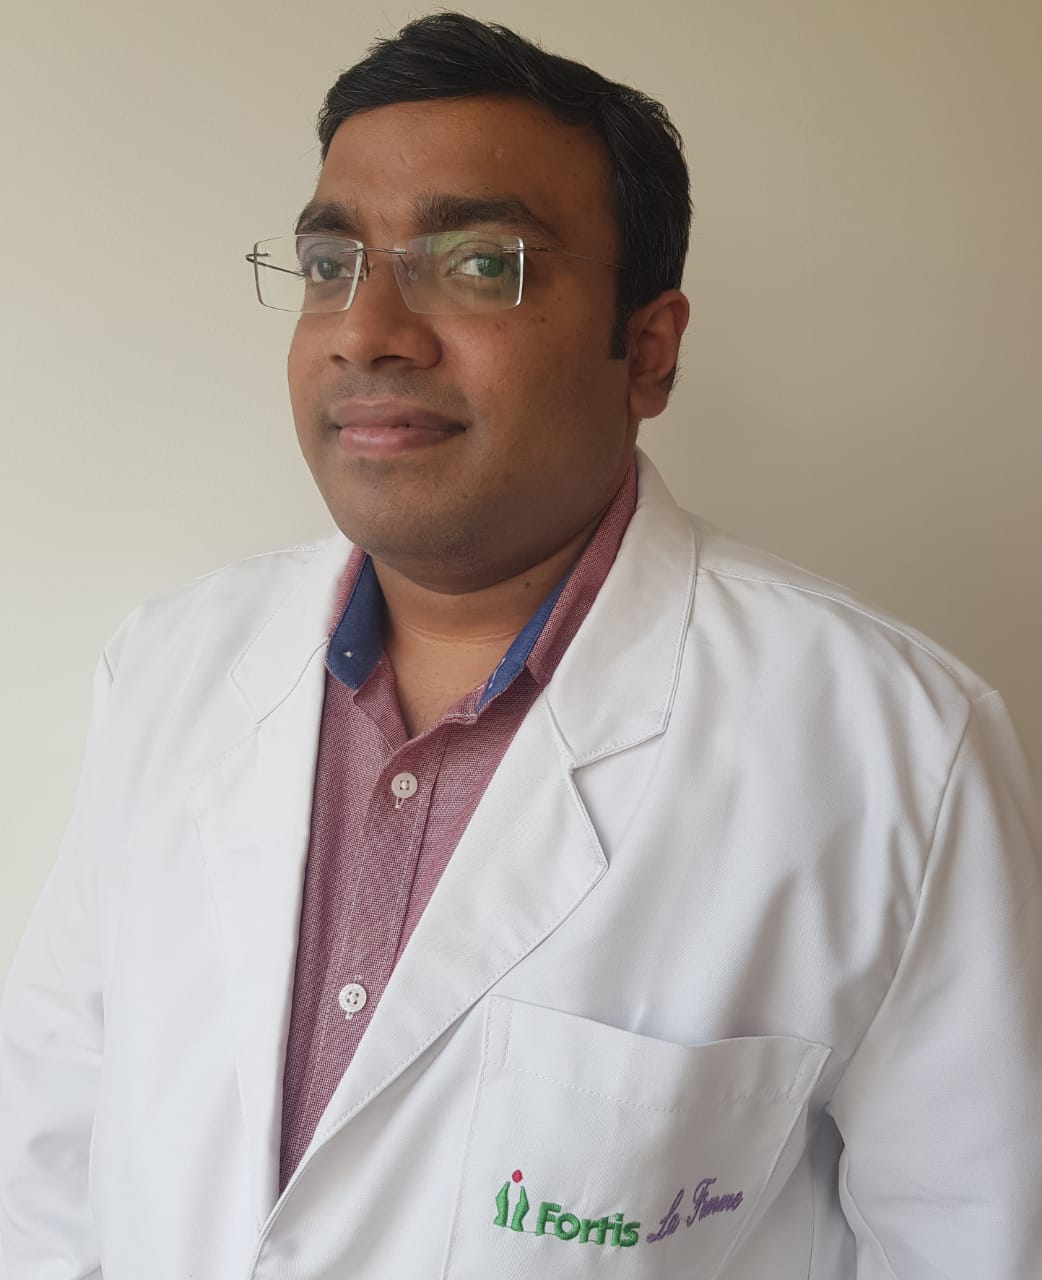 Dr. Harinath K S